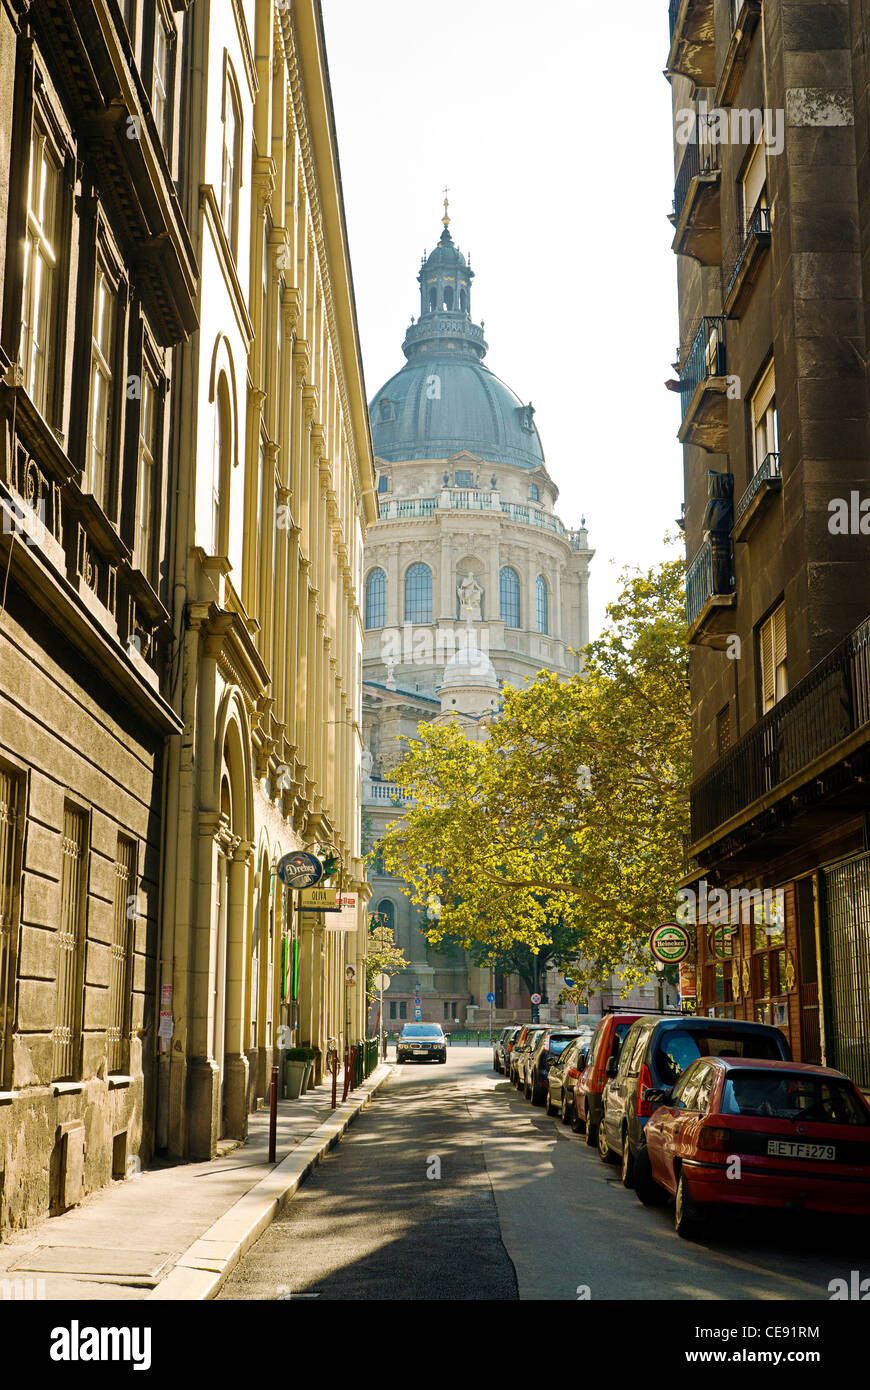 St.-Stephans Basilika von Lazar Utca, Budapest, Ungarn gesehen. Stockfoto